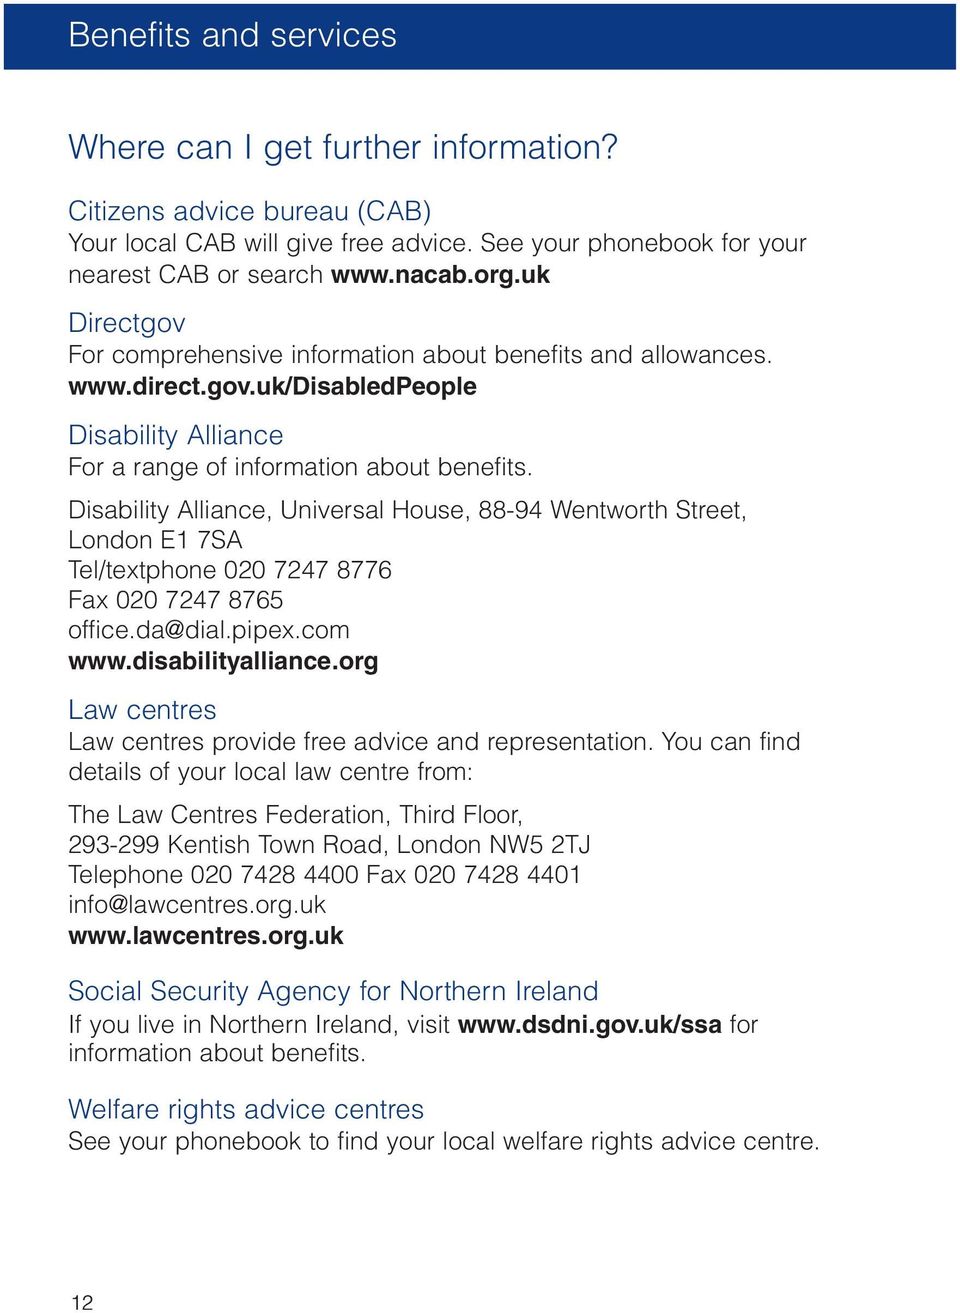 Disability Alliance, Universal House, 88-94 Wentworth Street, London E1 7SA Tel/textphone 020 7247 8776 Fax 020 7247 8765 office.da@dial.pipex.com www.disabilityalliance.